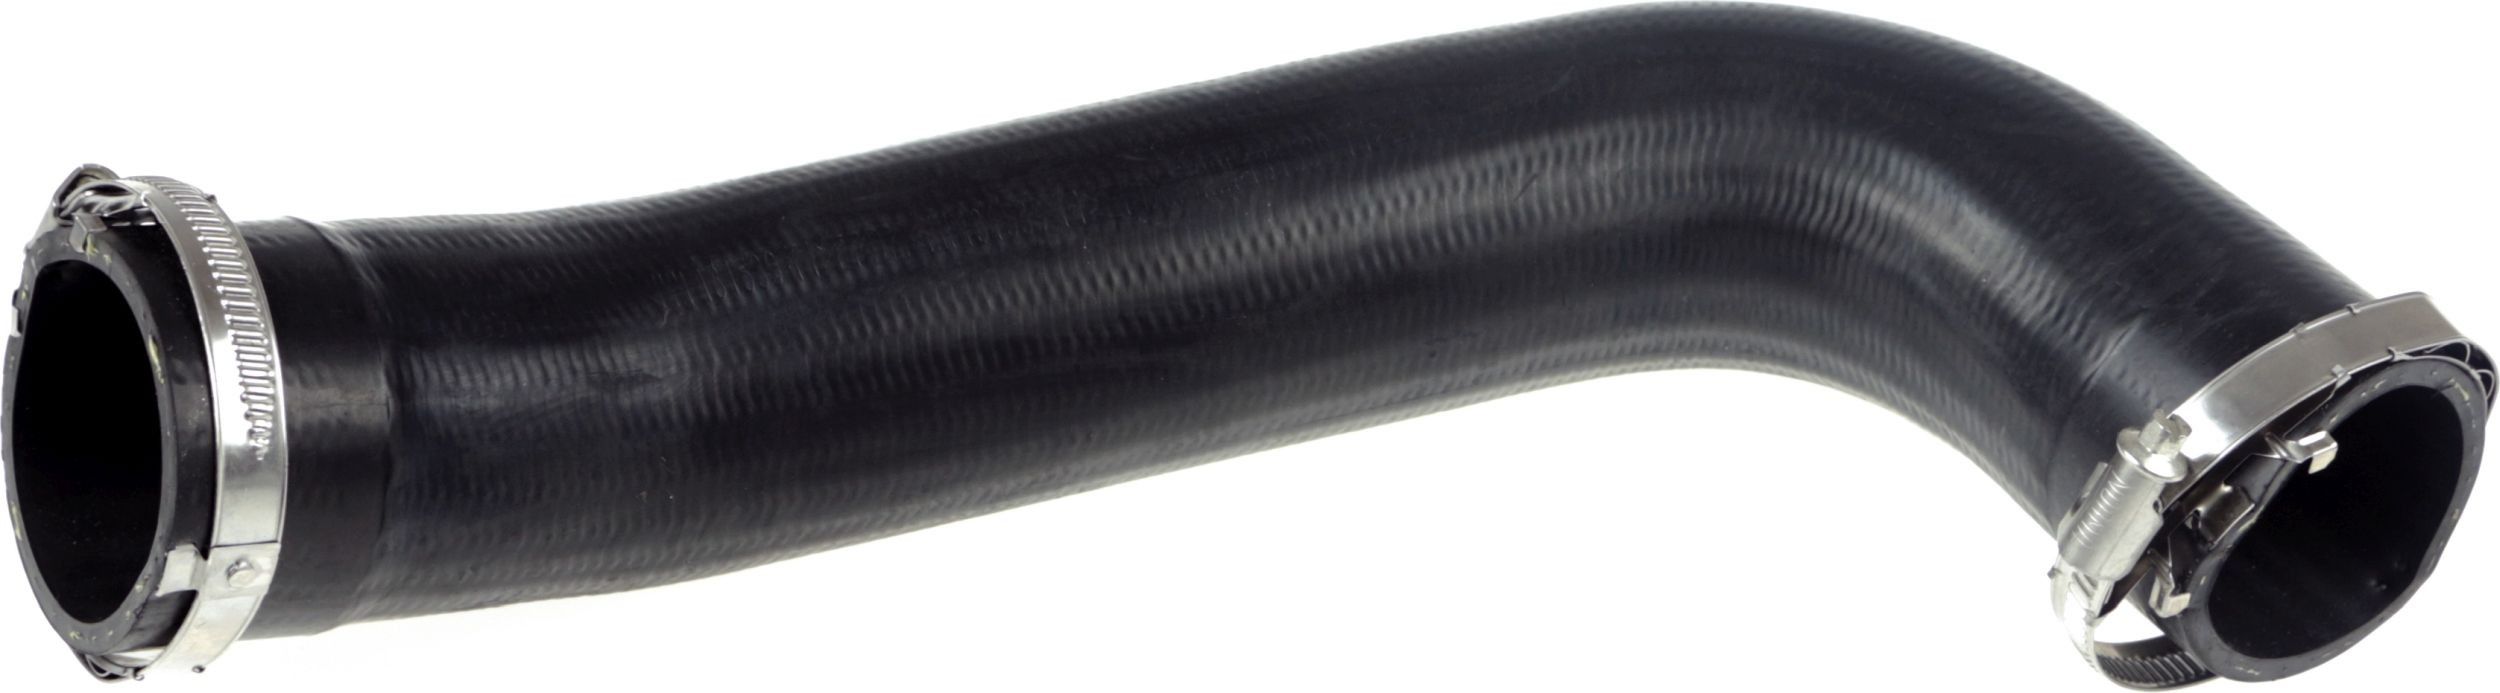 4275-53488 GATES EPDM (ethylene propylene diene Monomer (M-class) rubber) Hose Length: 465mm Coolant Hose 05-3488 buy